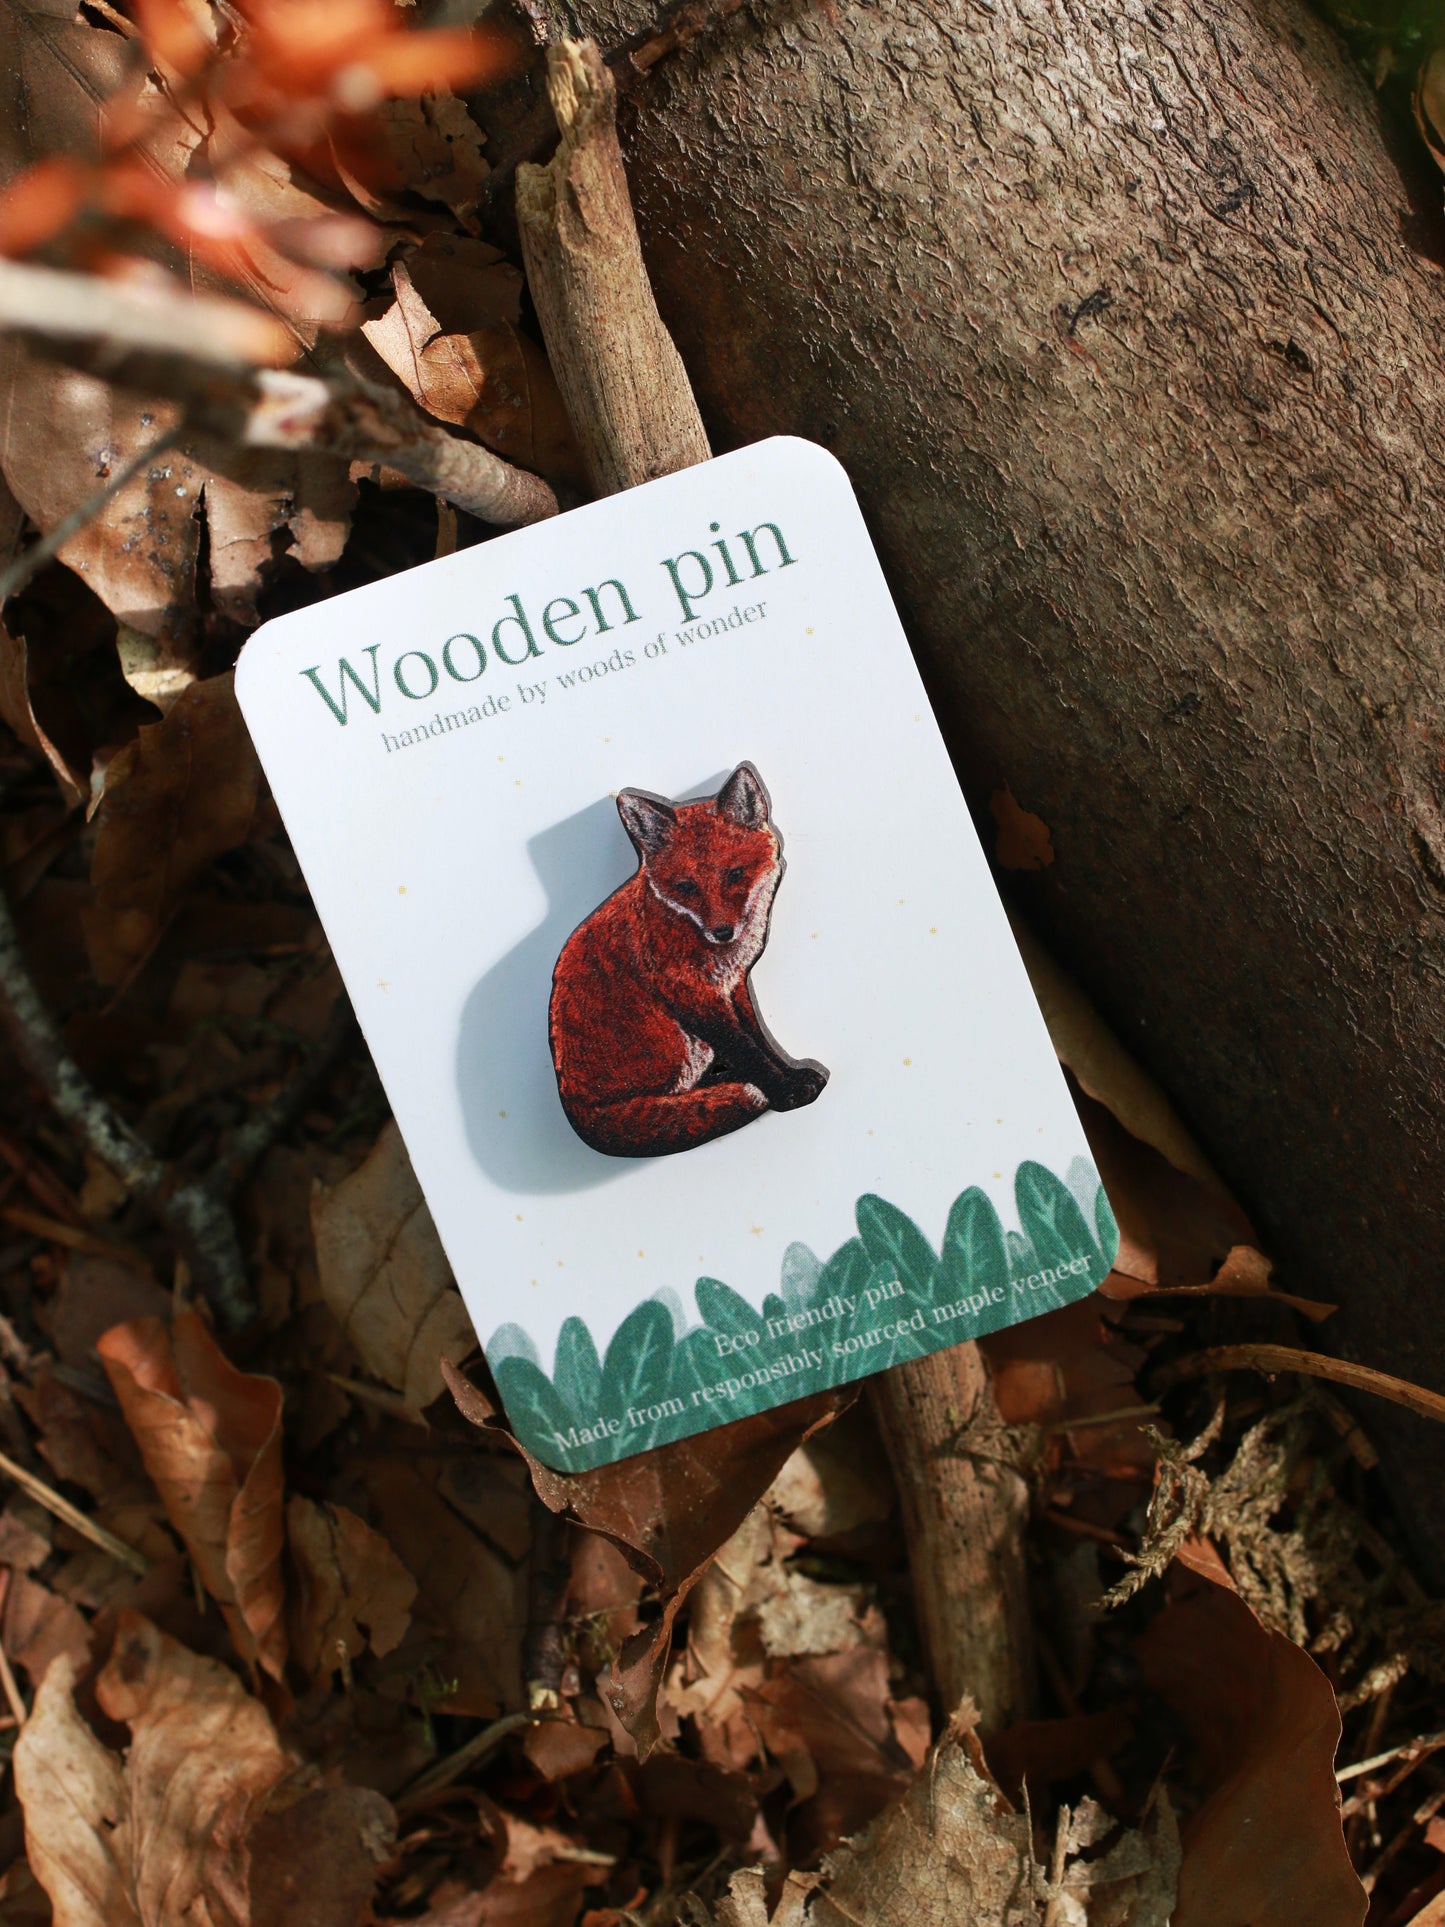 Fox cub wooden pin